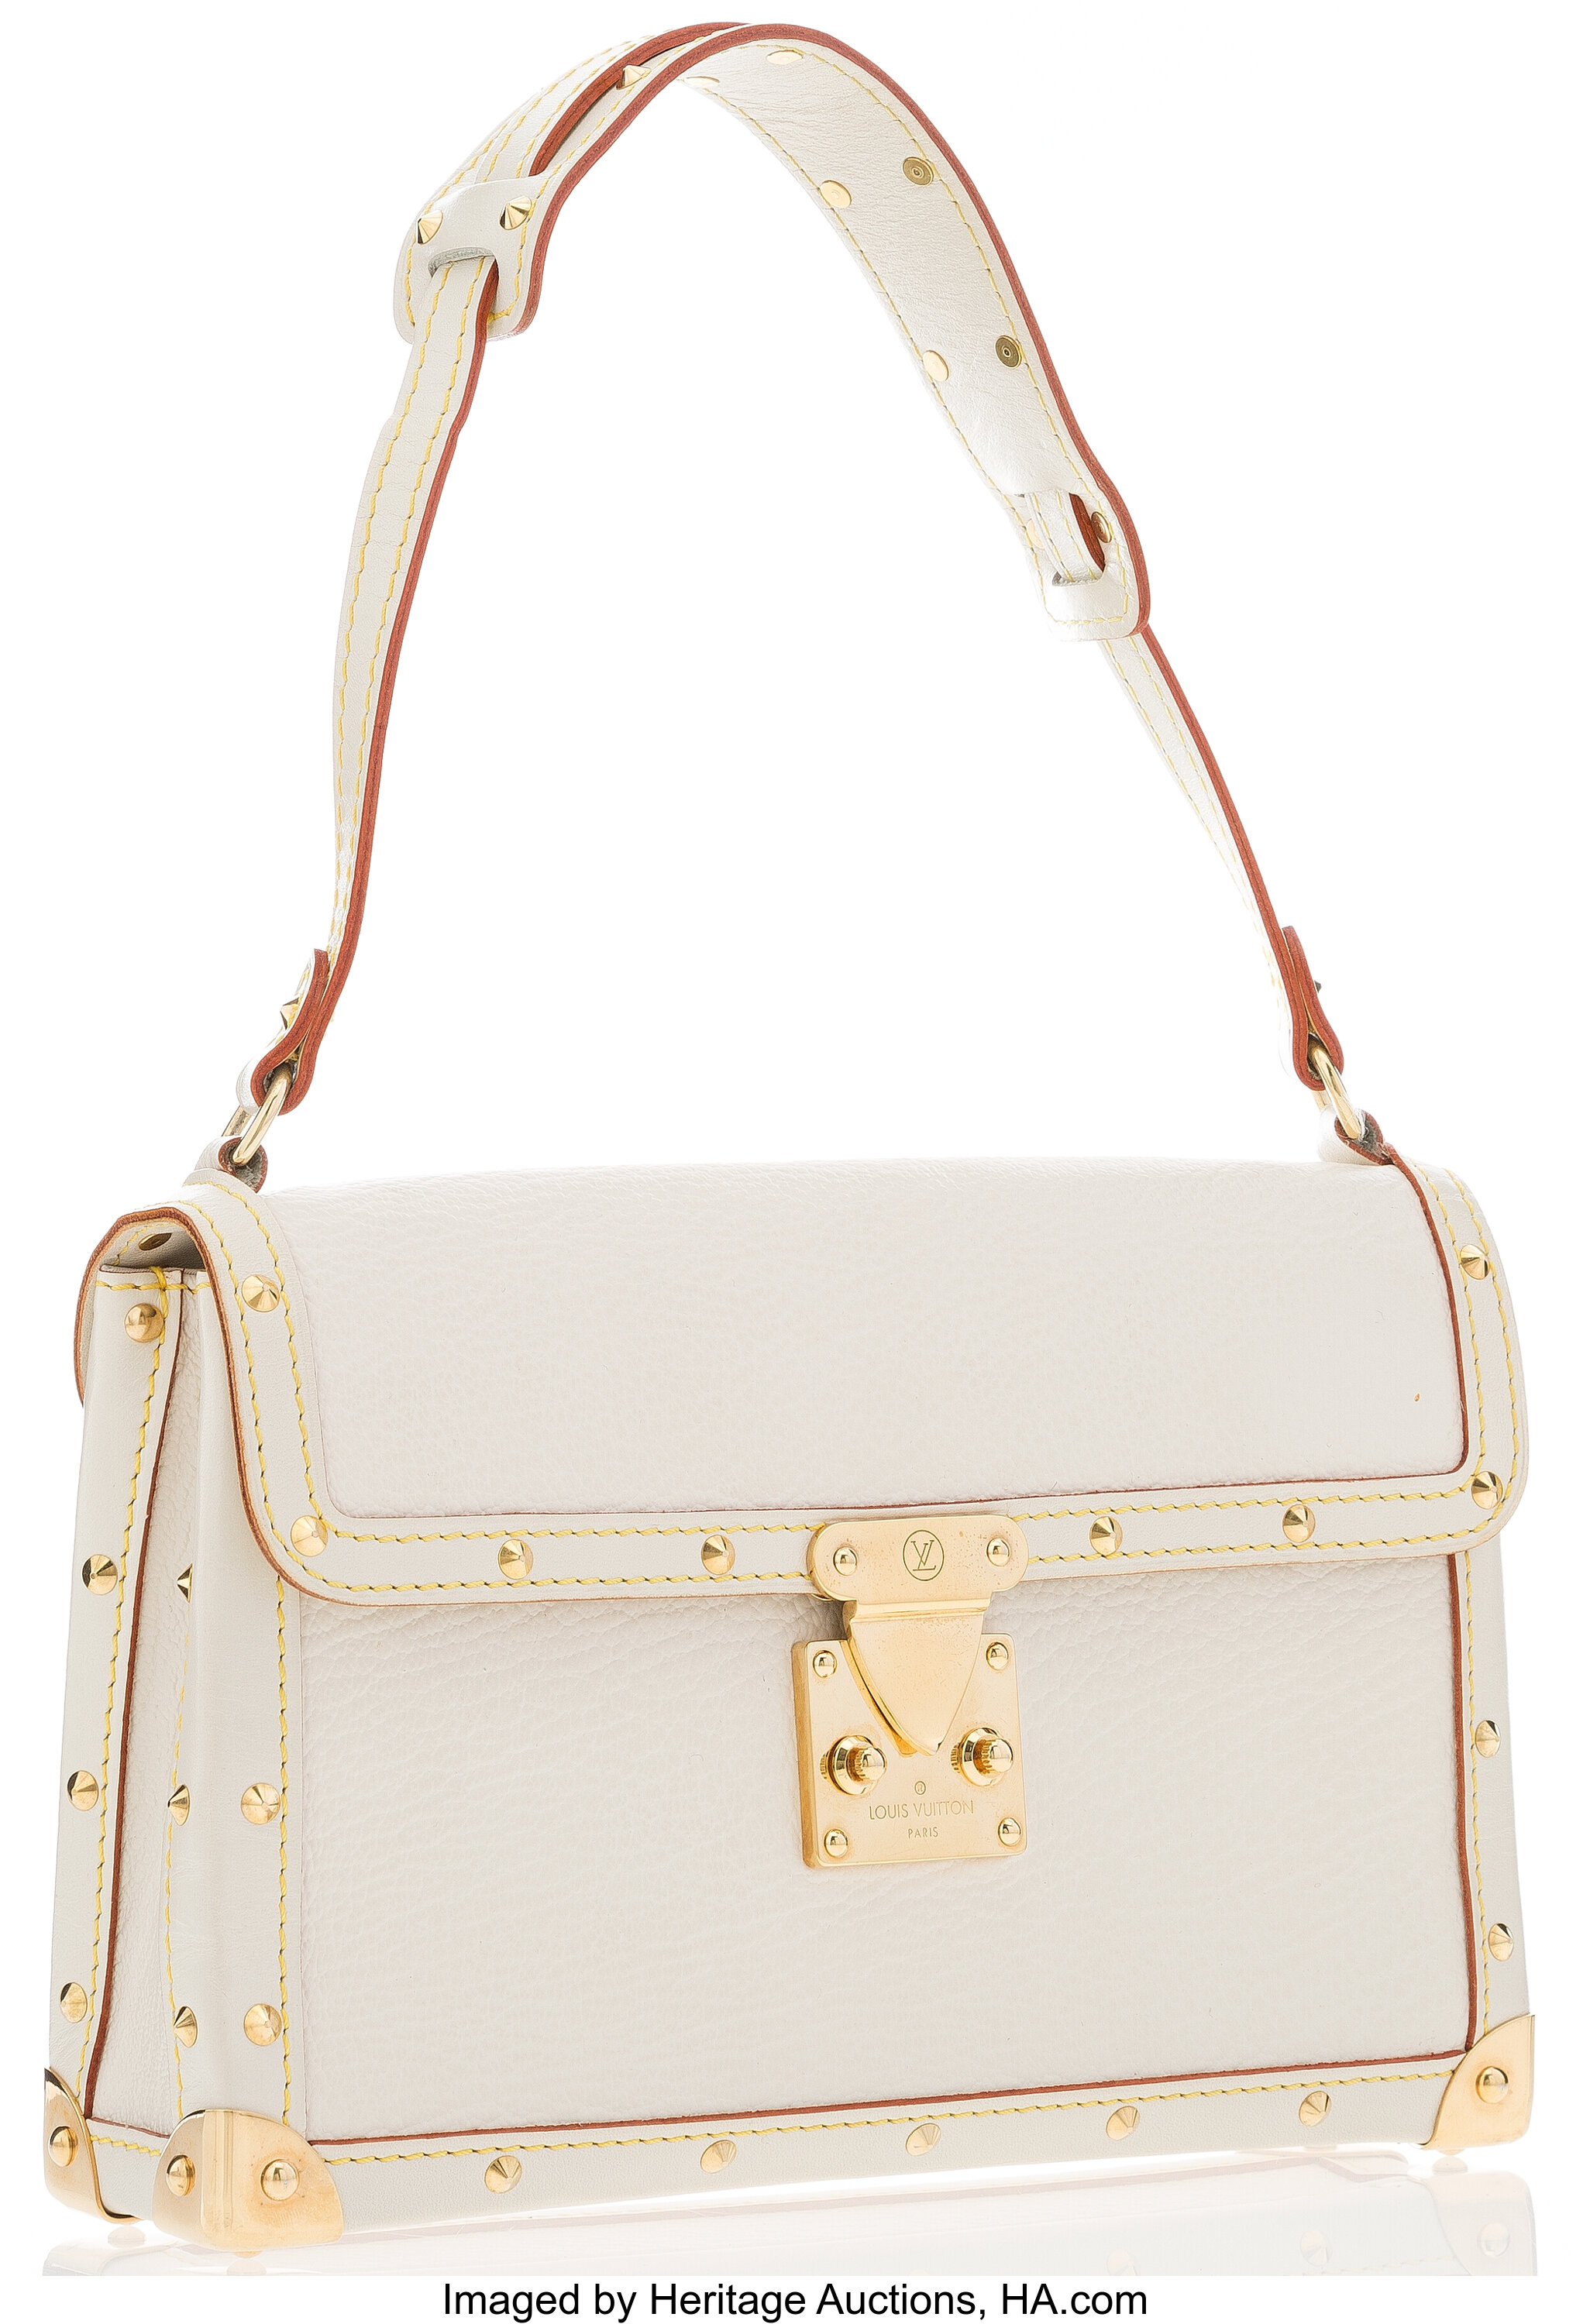 Buy White Louis Vuitton Handbag Online In India -  India